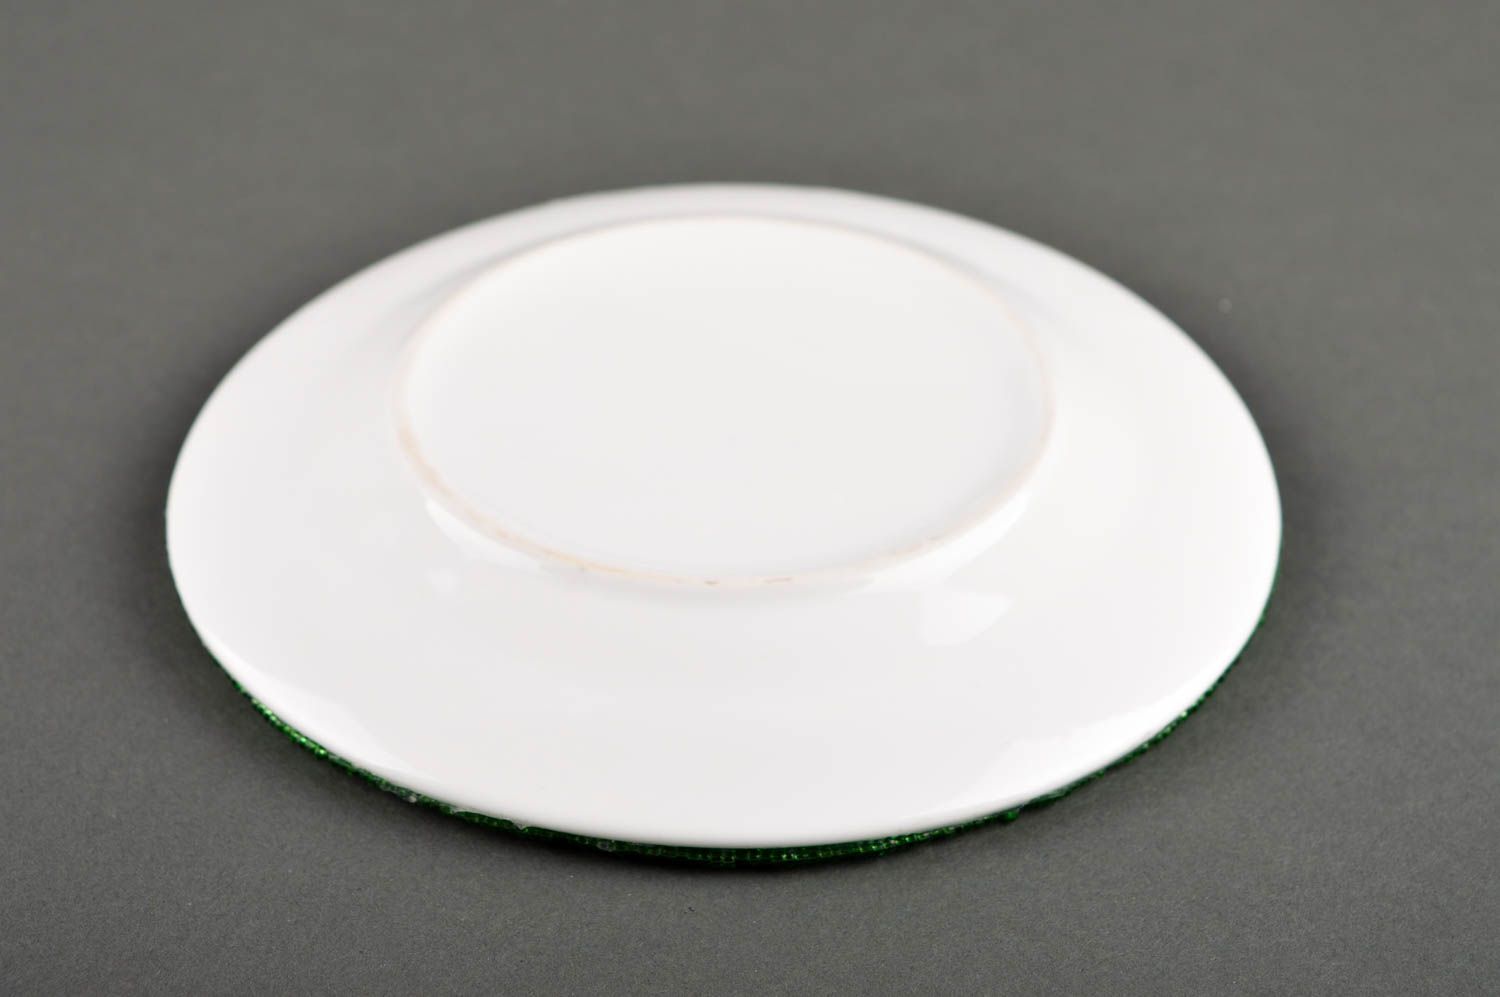 Handmade wedding dish decorative plate for wedding decorative use only photo 5